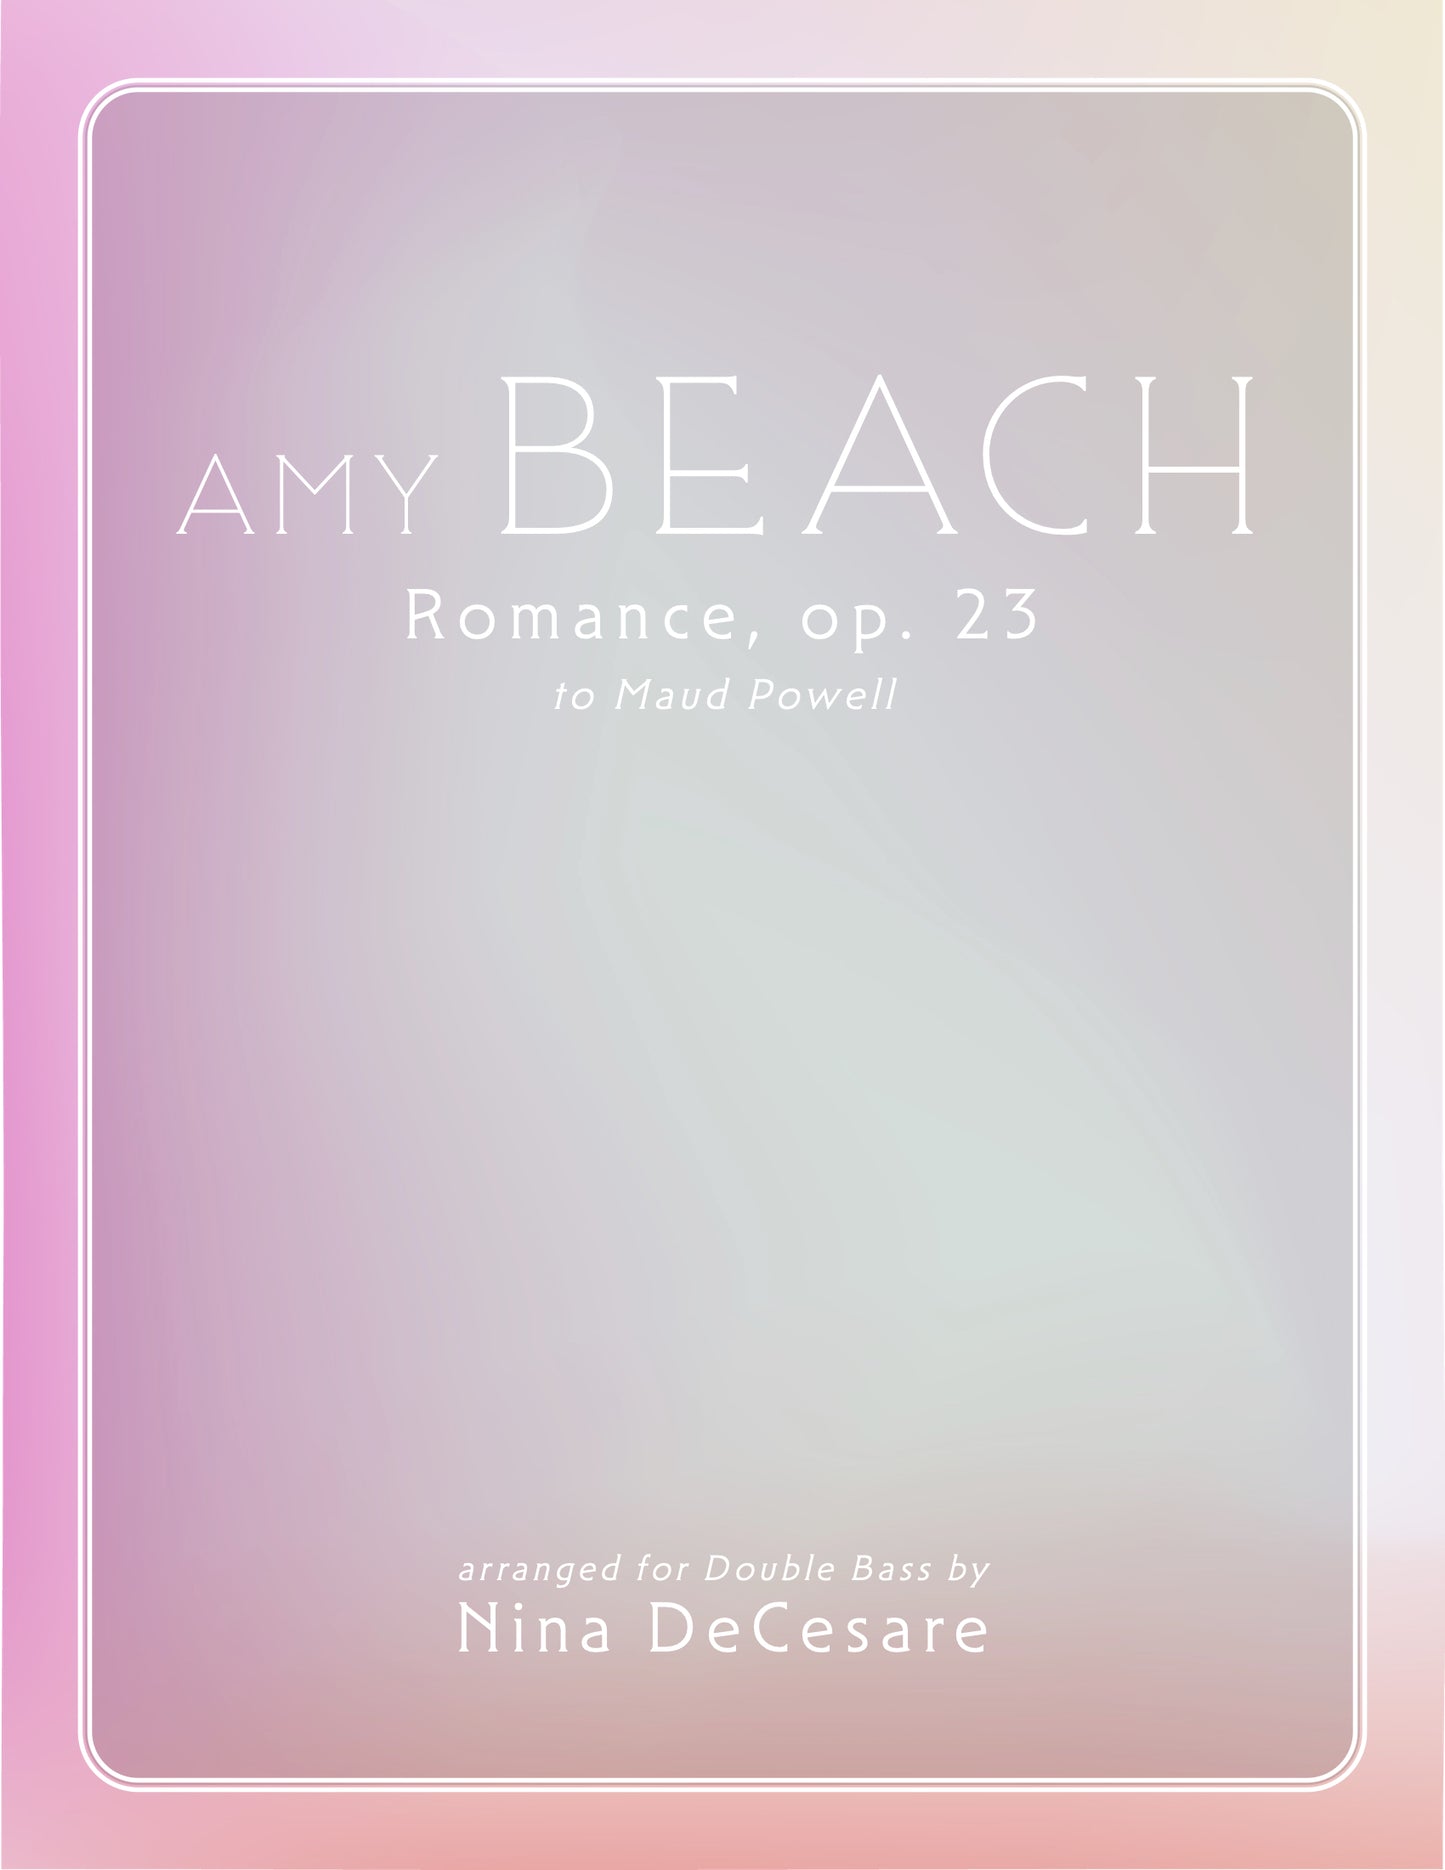 Beach: Romance, Op. 23 for double bass and piano (arr. Nina DeCesare)